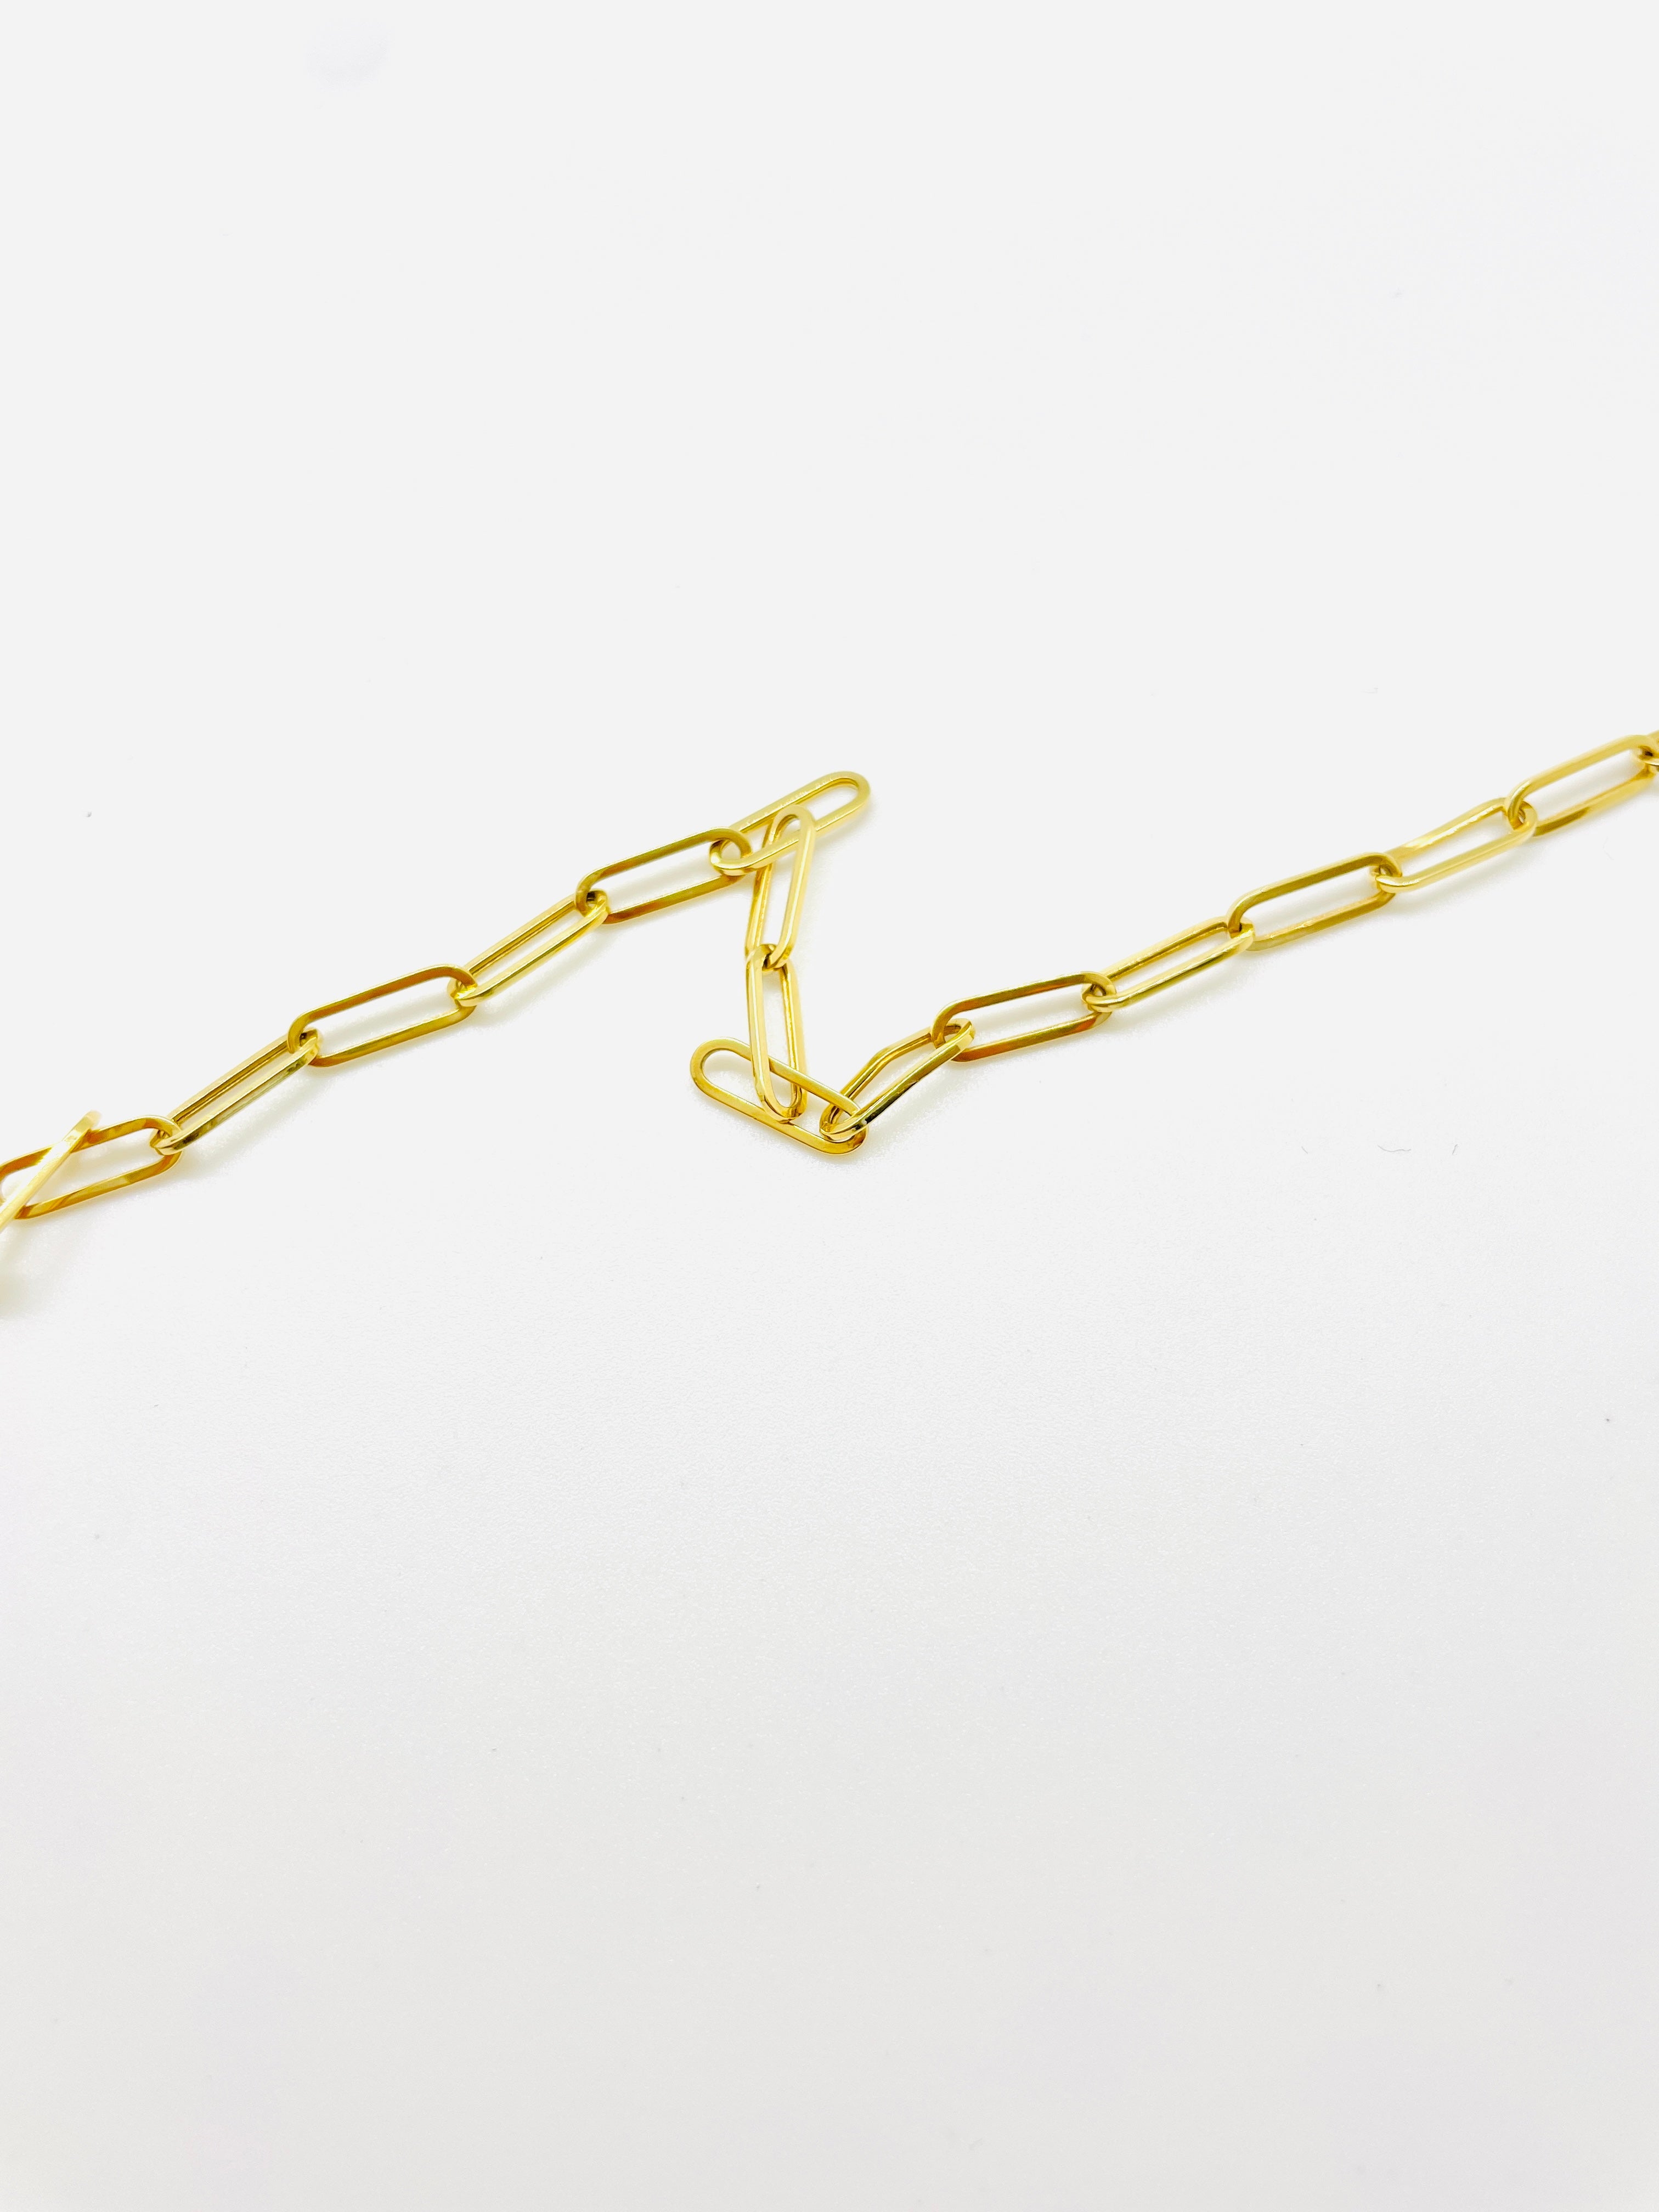 Permanent Jewelry The Ella Paper Clip Bracelet - Yellow Gold Ella-YG-14k  - Casale Jewelers